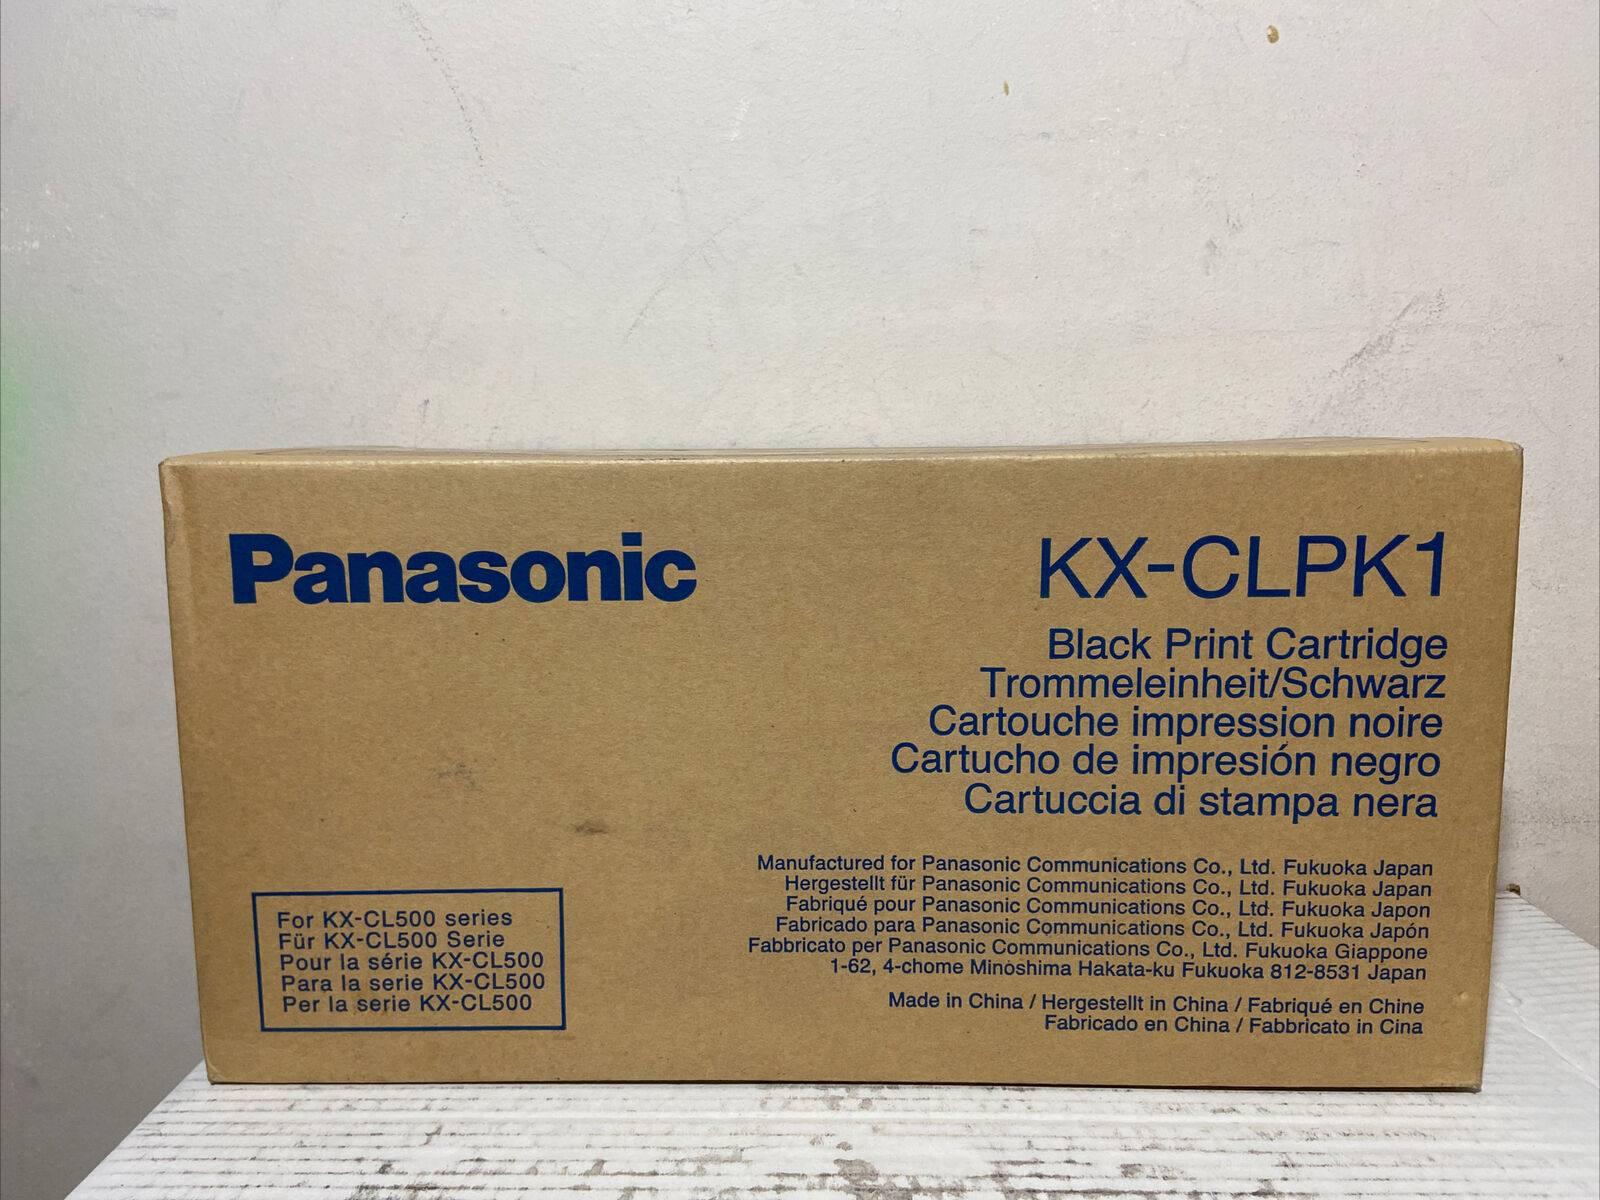 Genuine Panasonic KX-CLPK-1 Black Print Cartridge KX-CL 500 Series